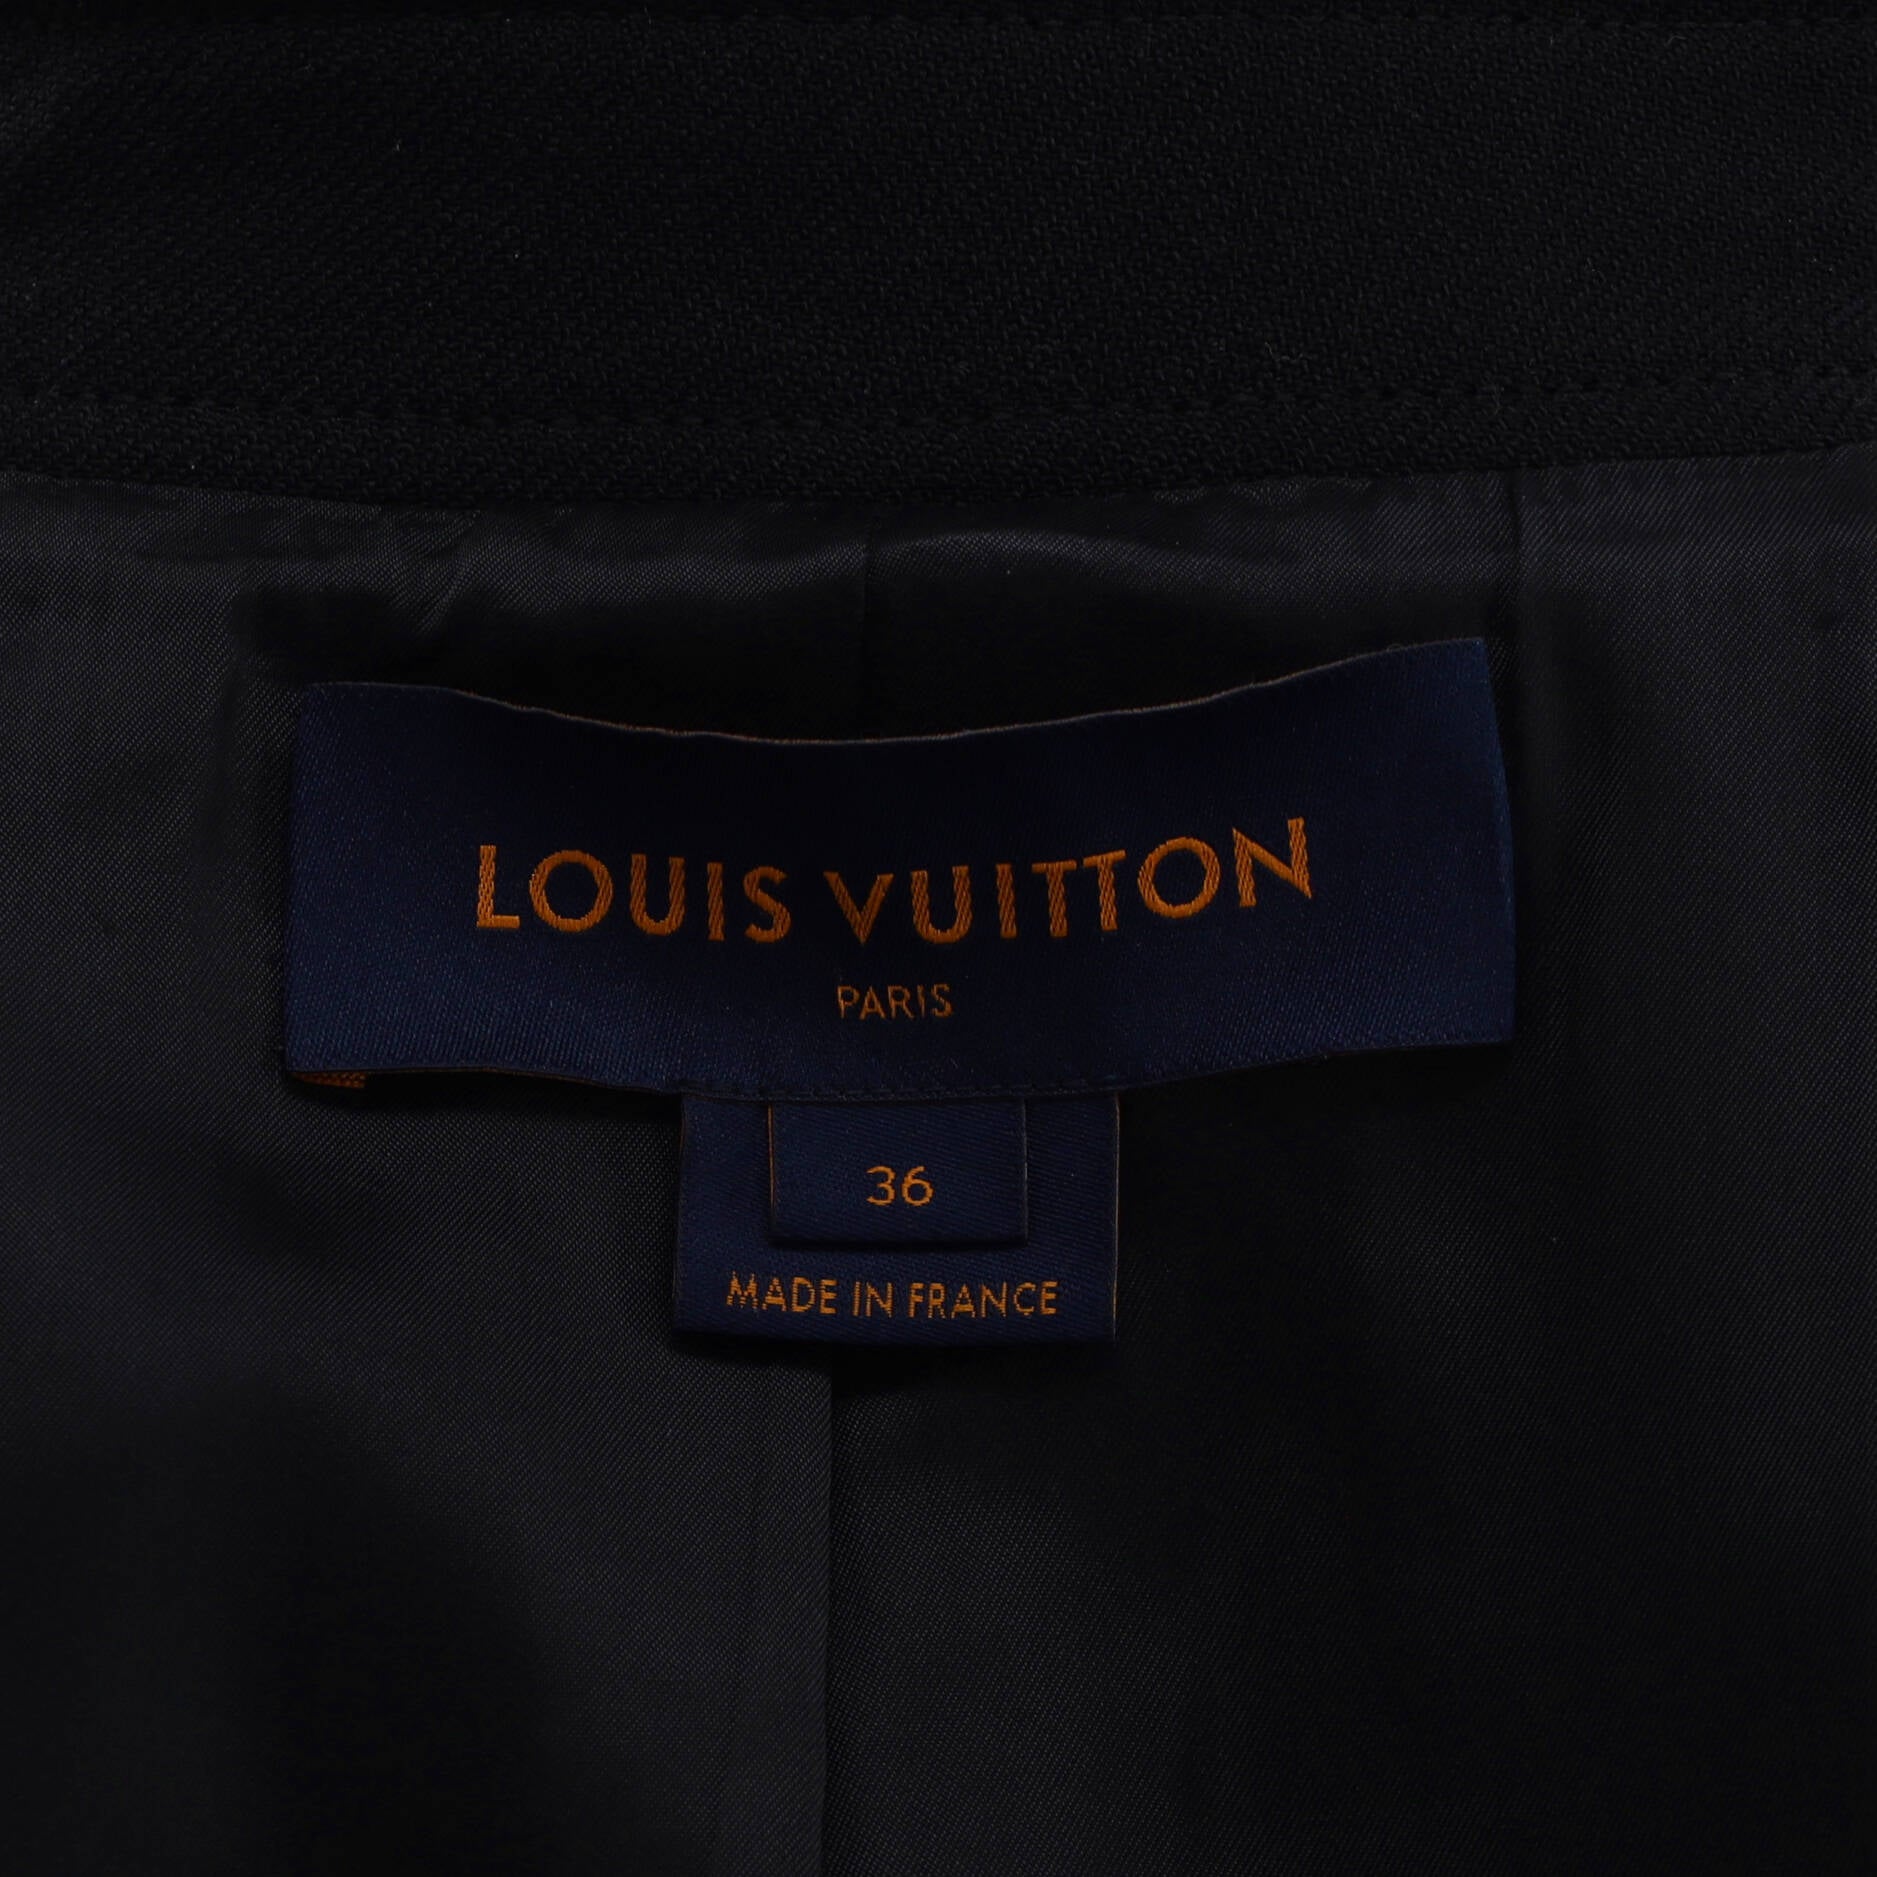 Louis Vuitton Women's Monogram Hooded Wrap Coat Wool Blend Neutral 1776776